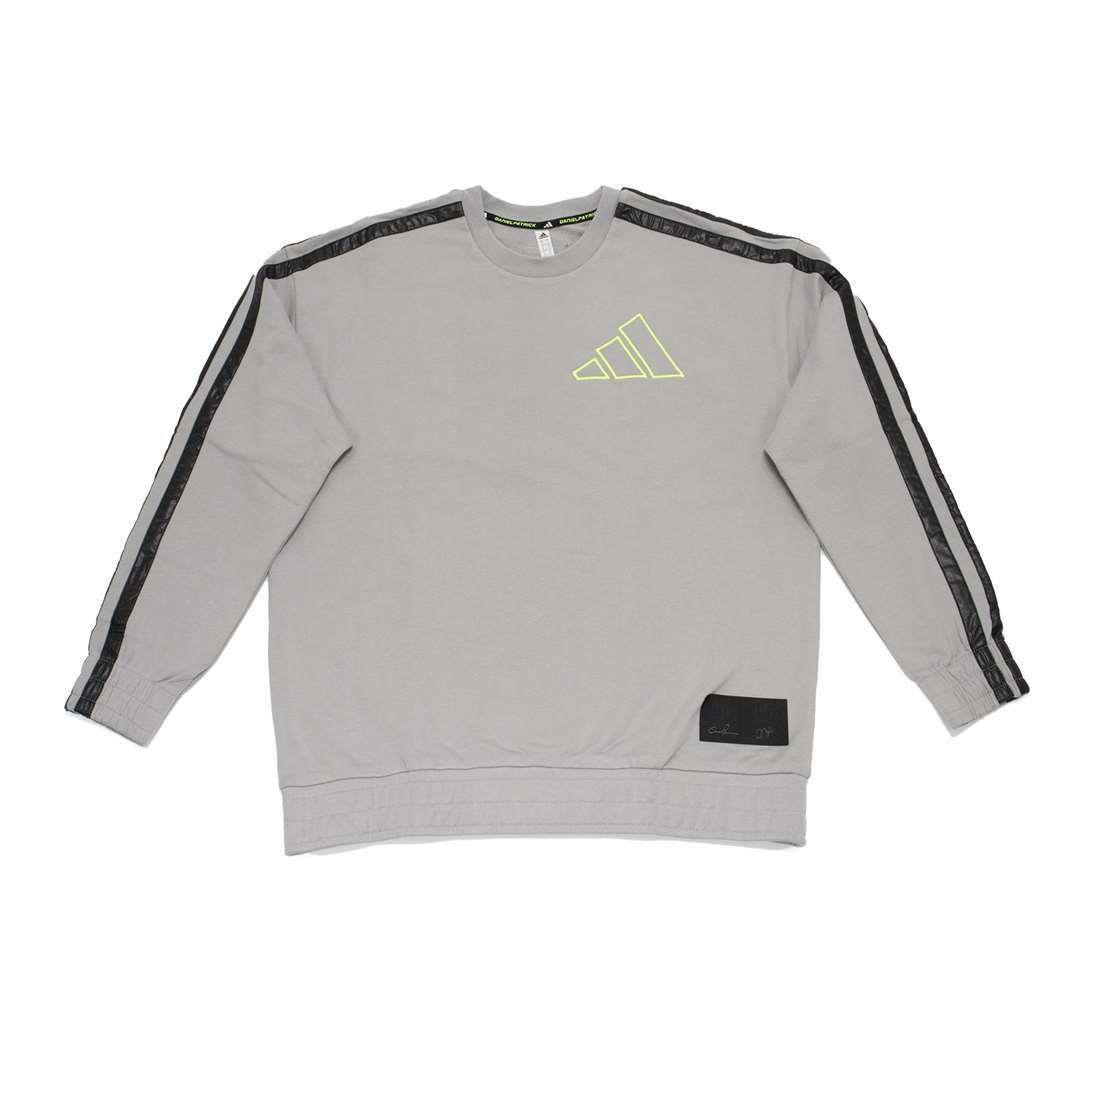 Adidas Daniel Patrick x James Harden Grey Sweatshirt French Terry Crew